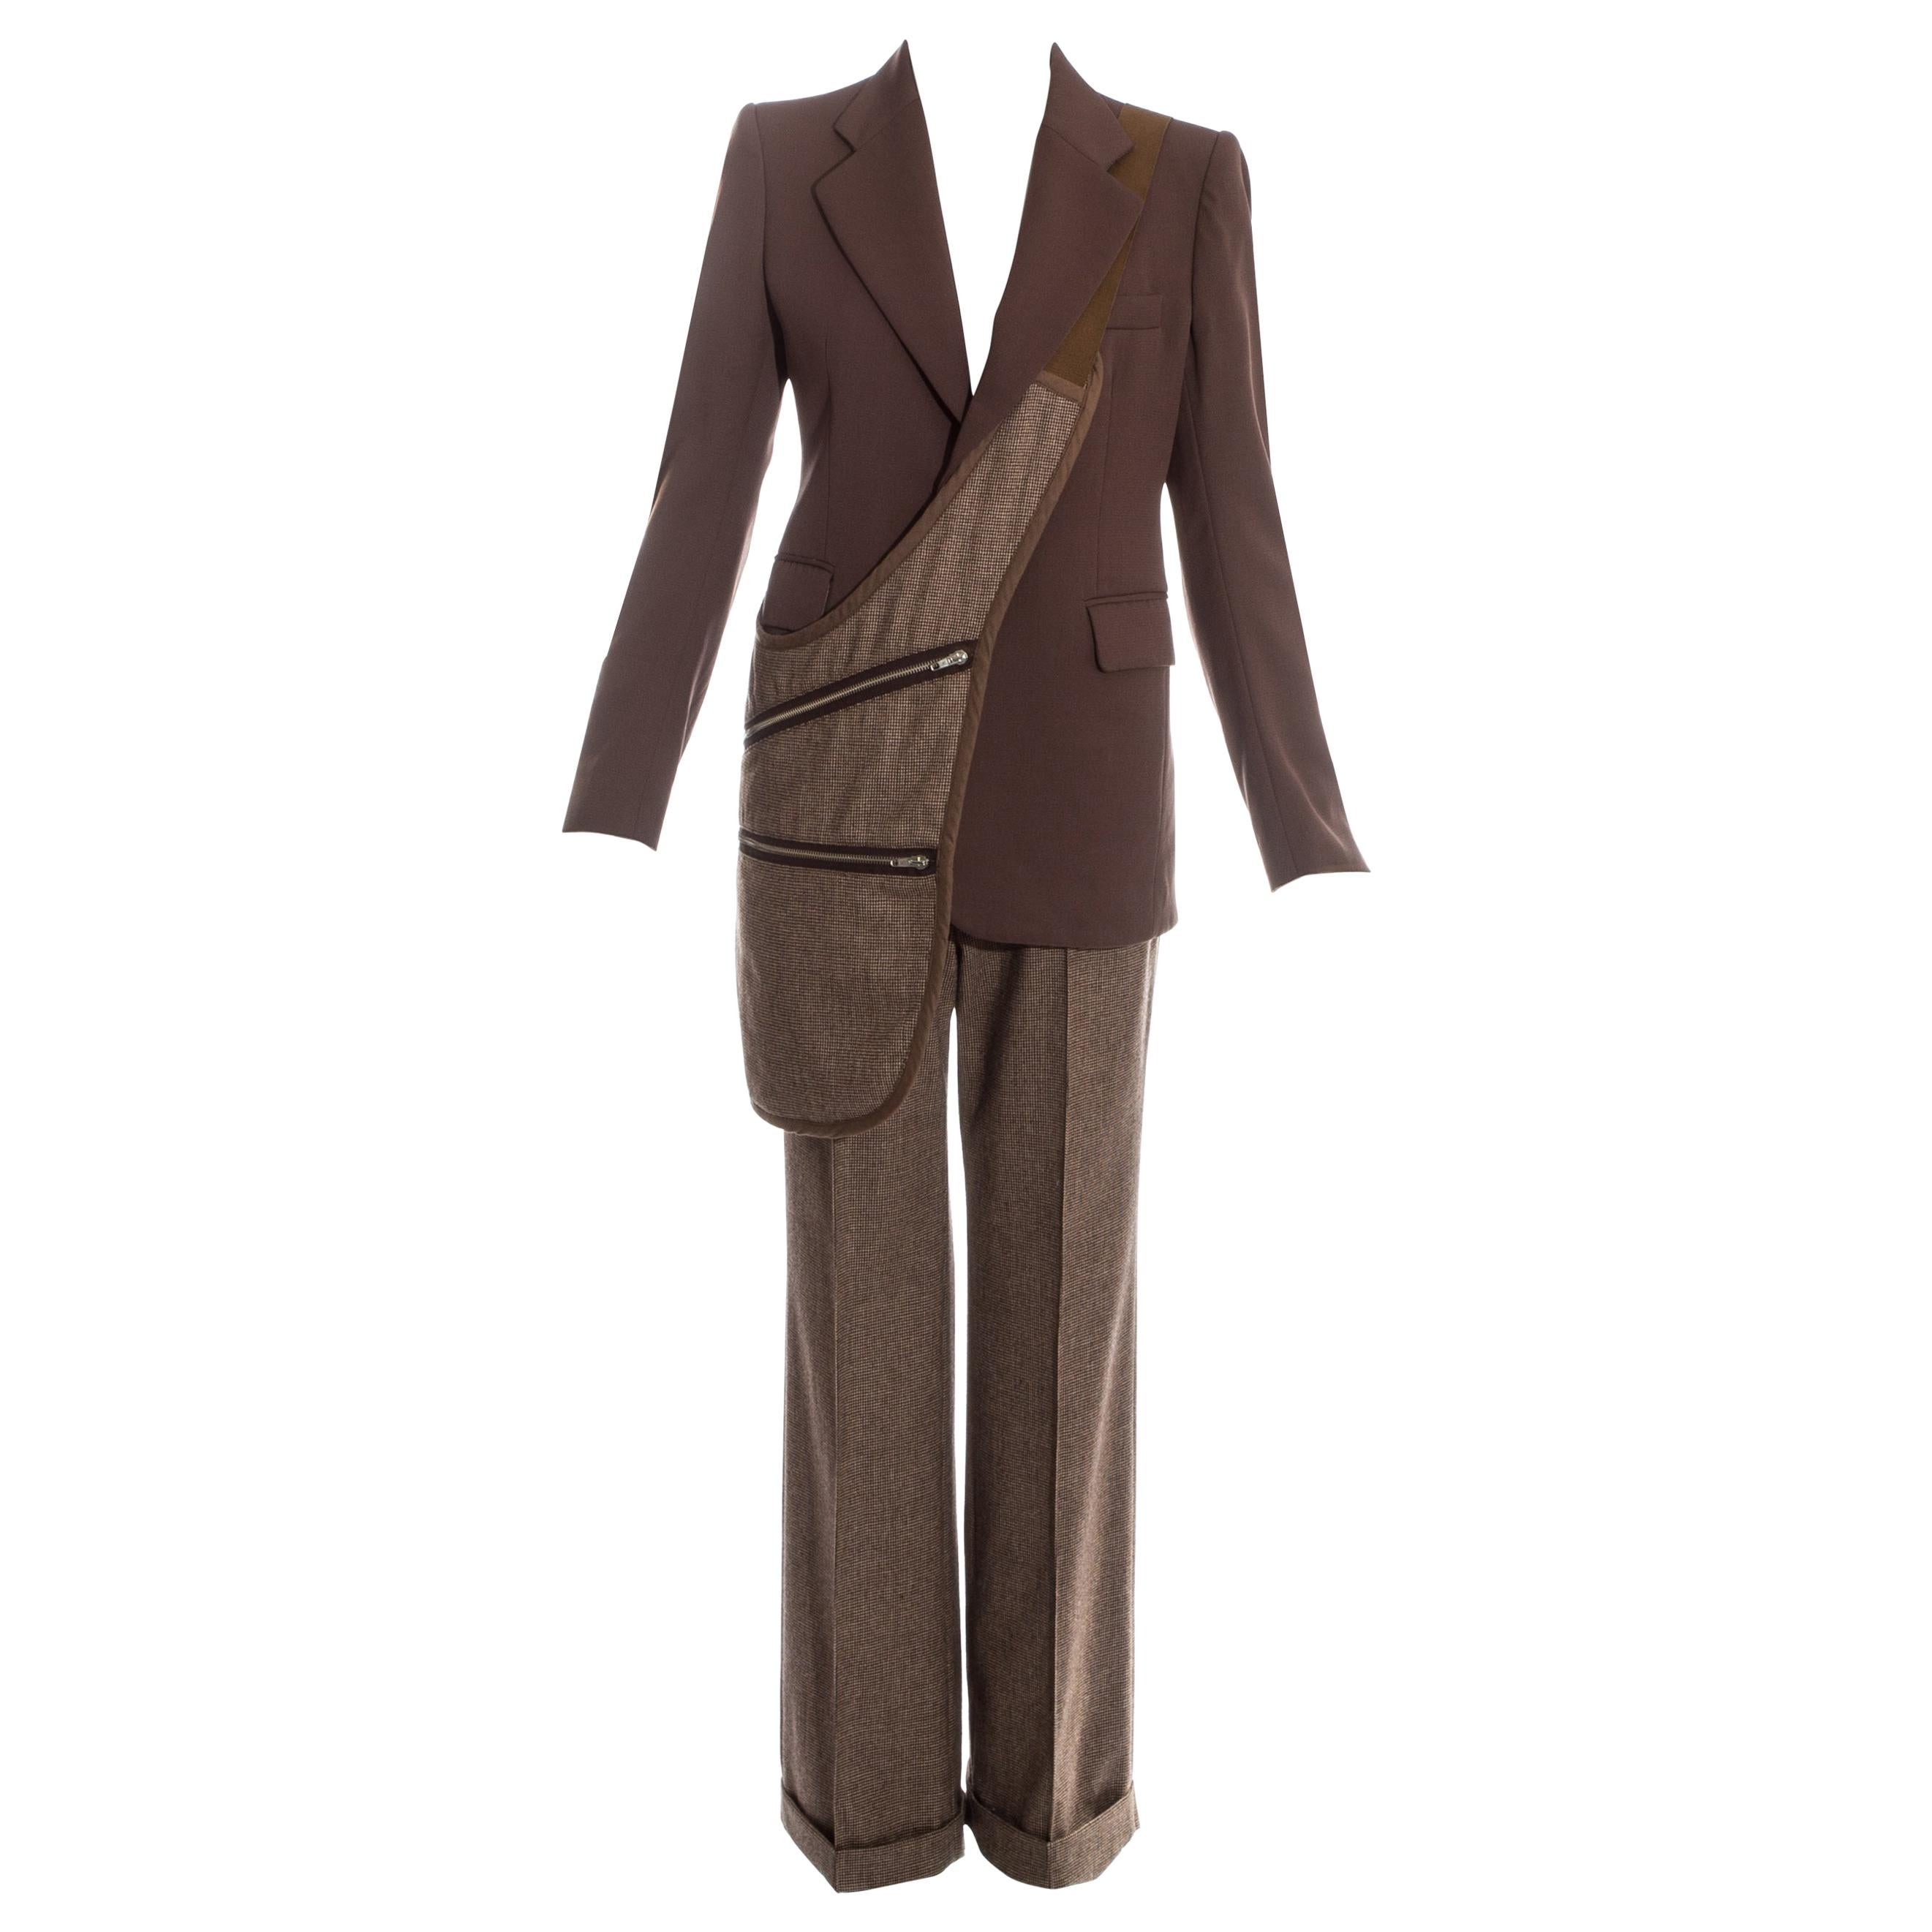 Margiela brown tweed wool pant suit with matching saddle bag, fw 1998